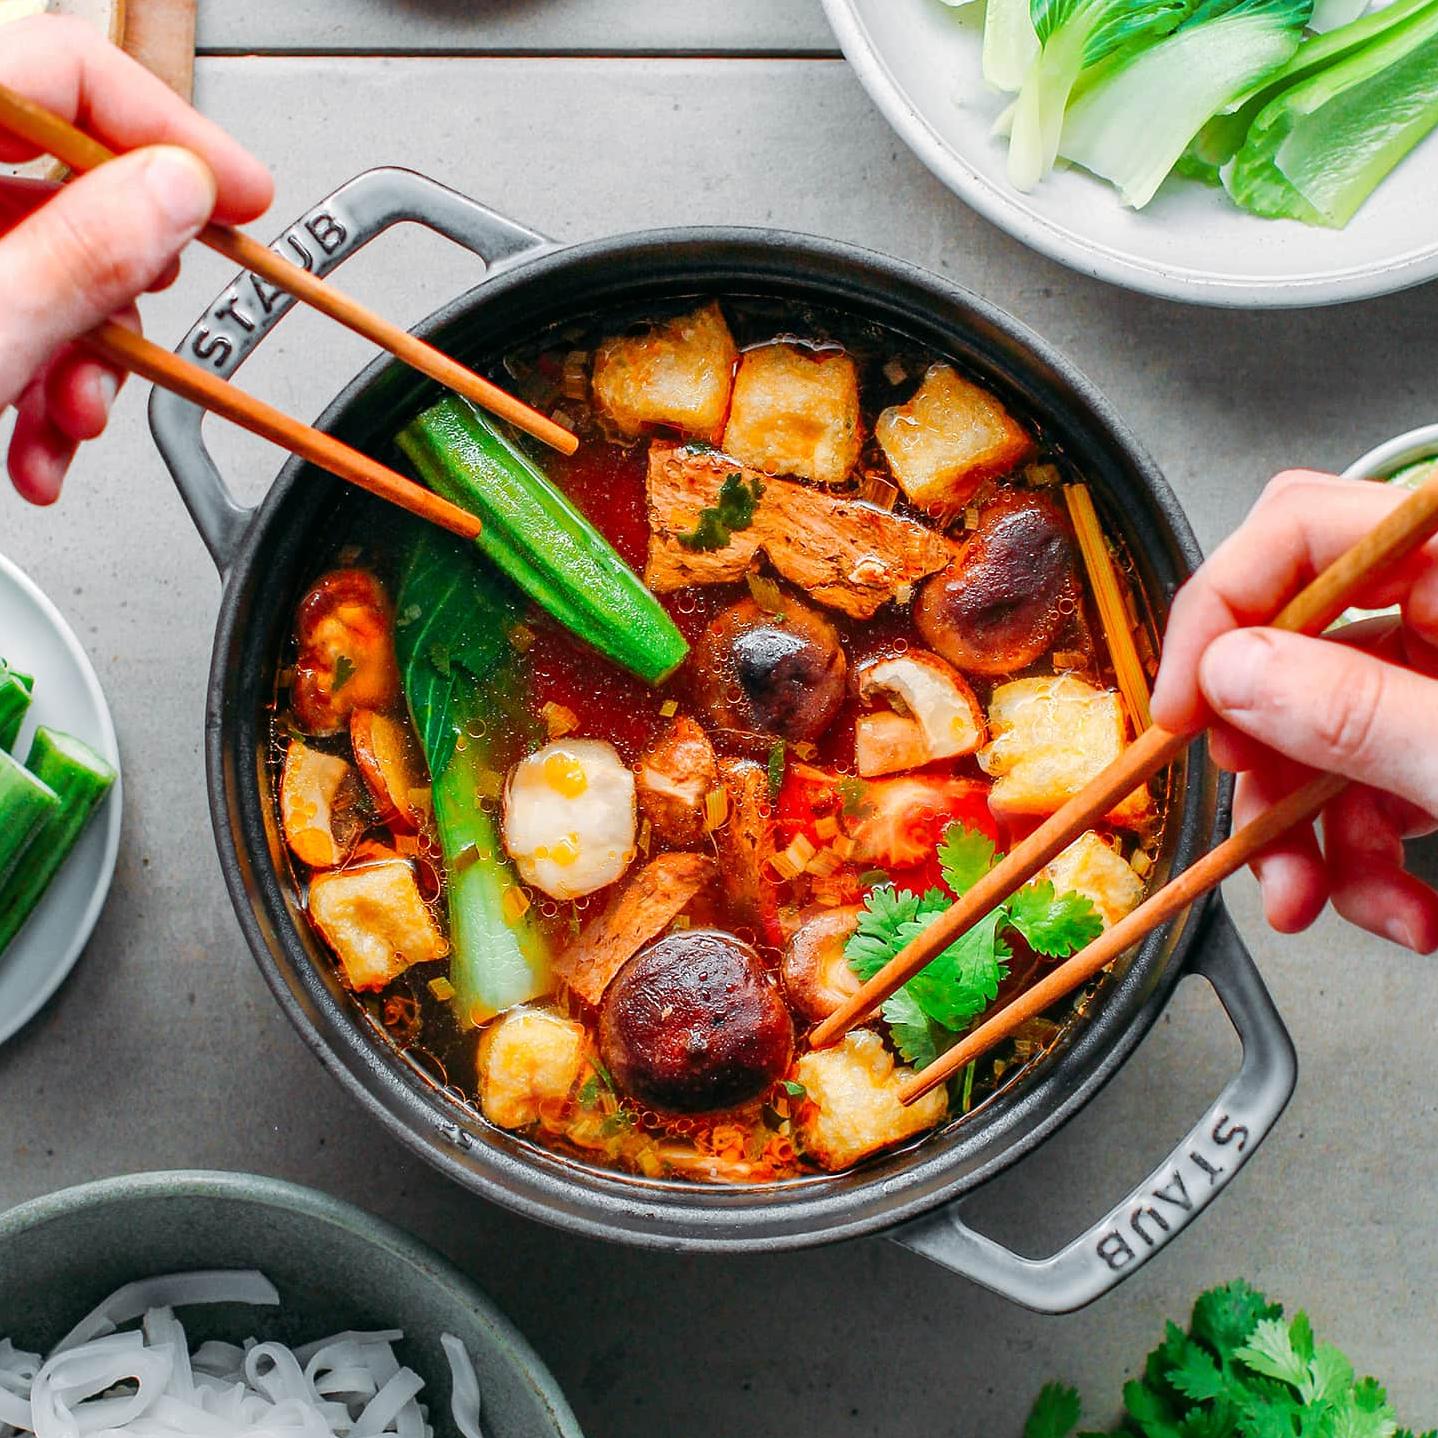 Vegan Vegetable Hot Pot Recipe – Nutritious and Delicious